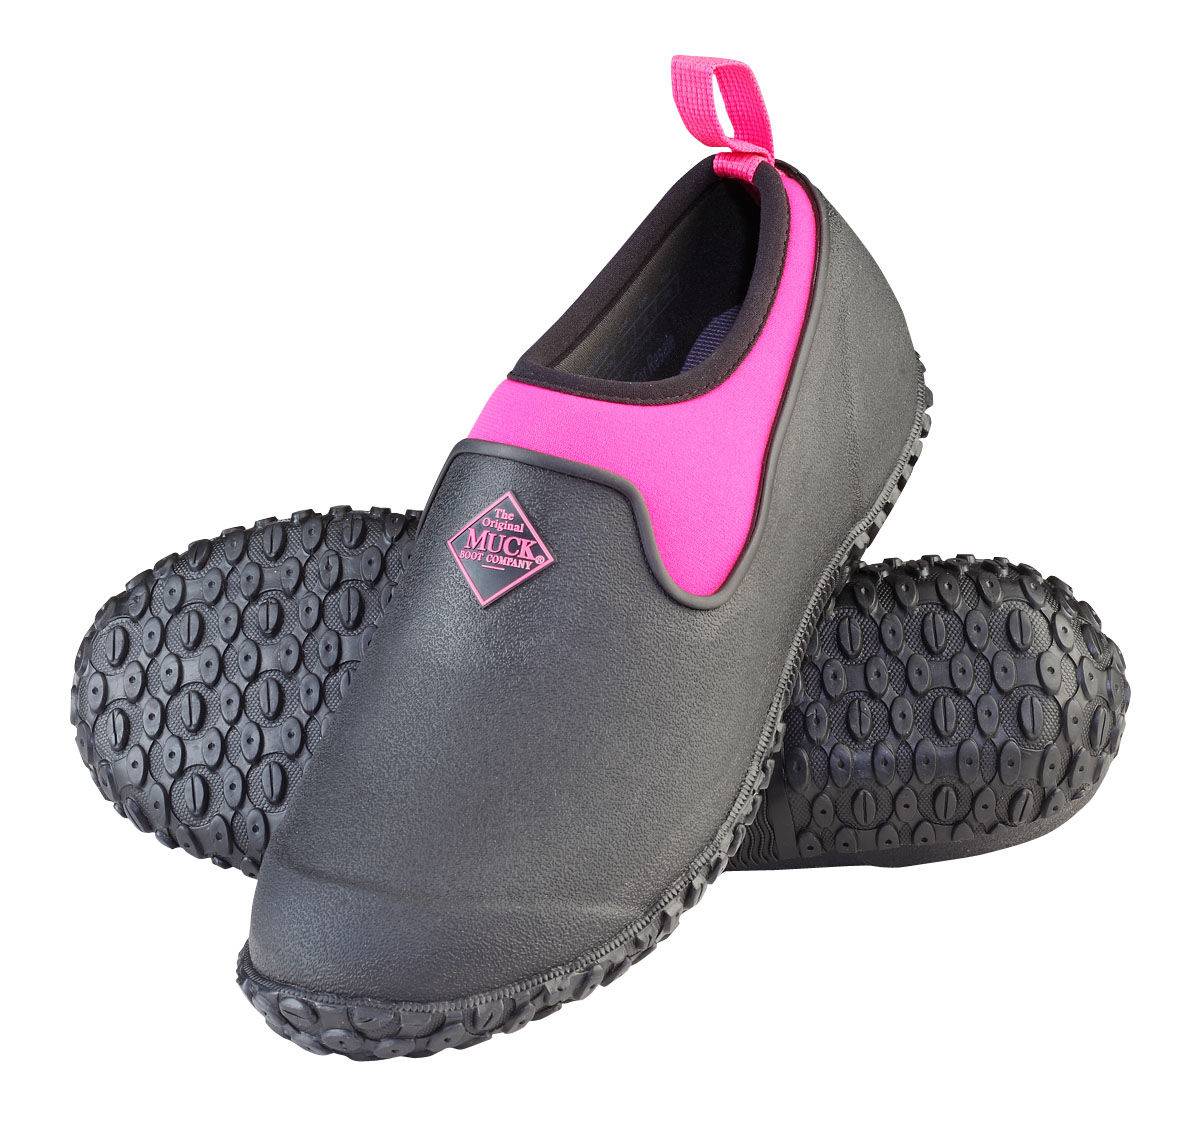 Muck Boots Muckster II Low - Ladies - Black/Pink